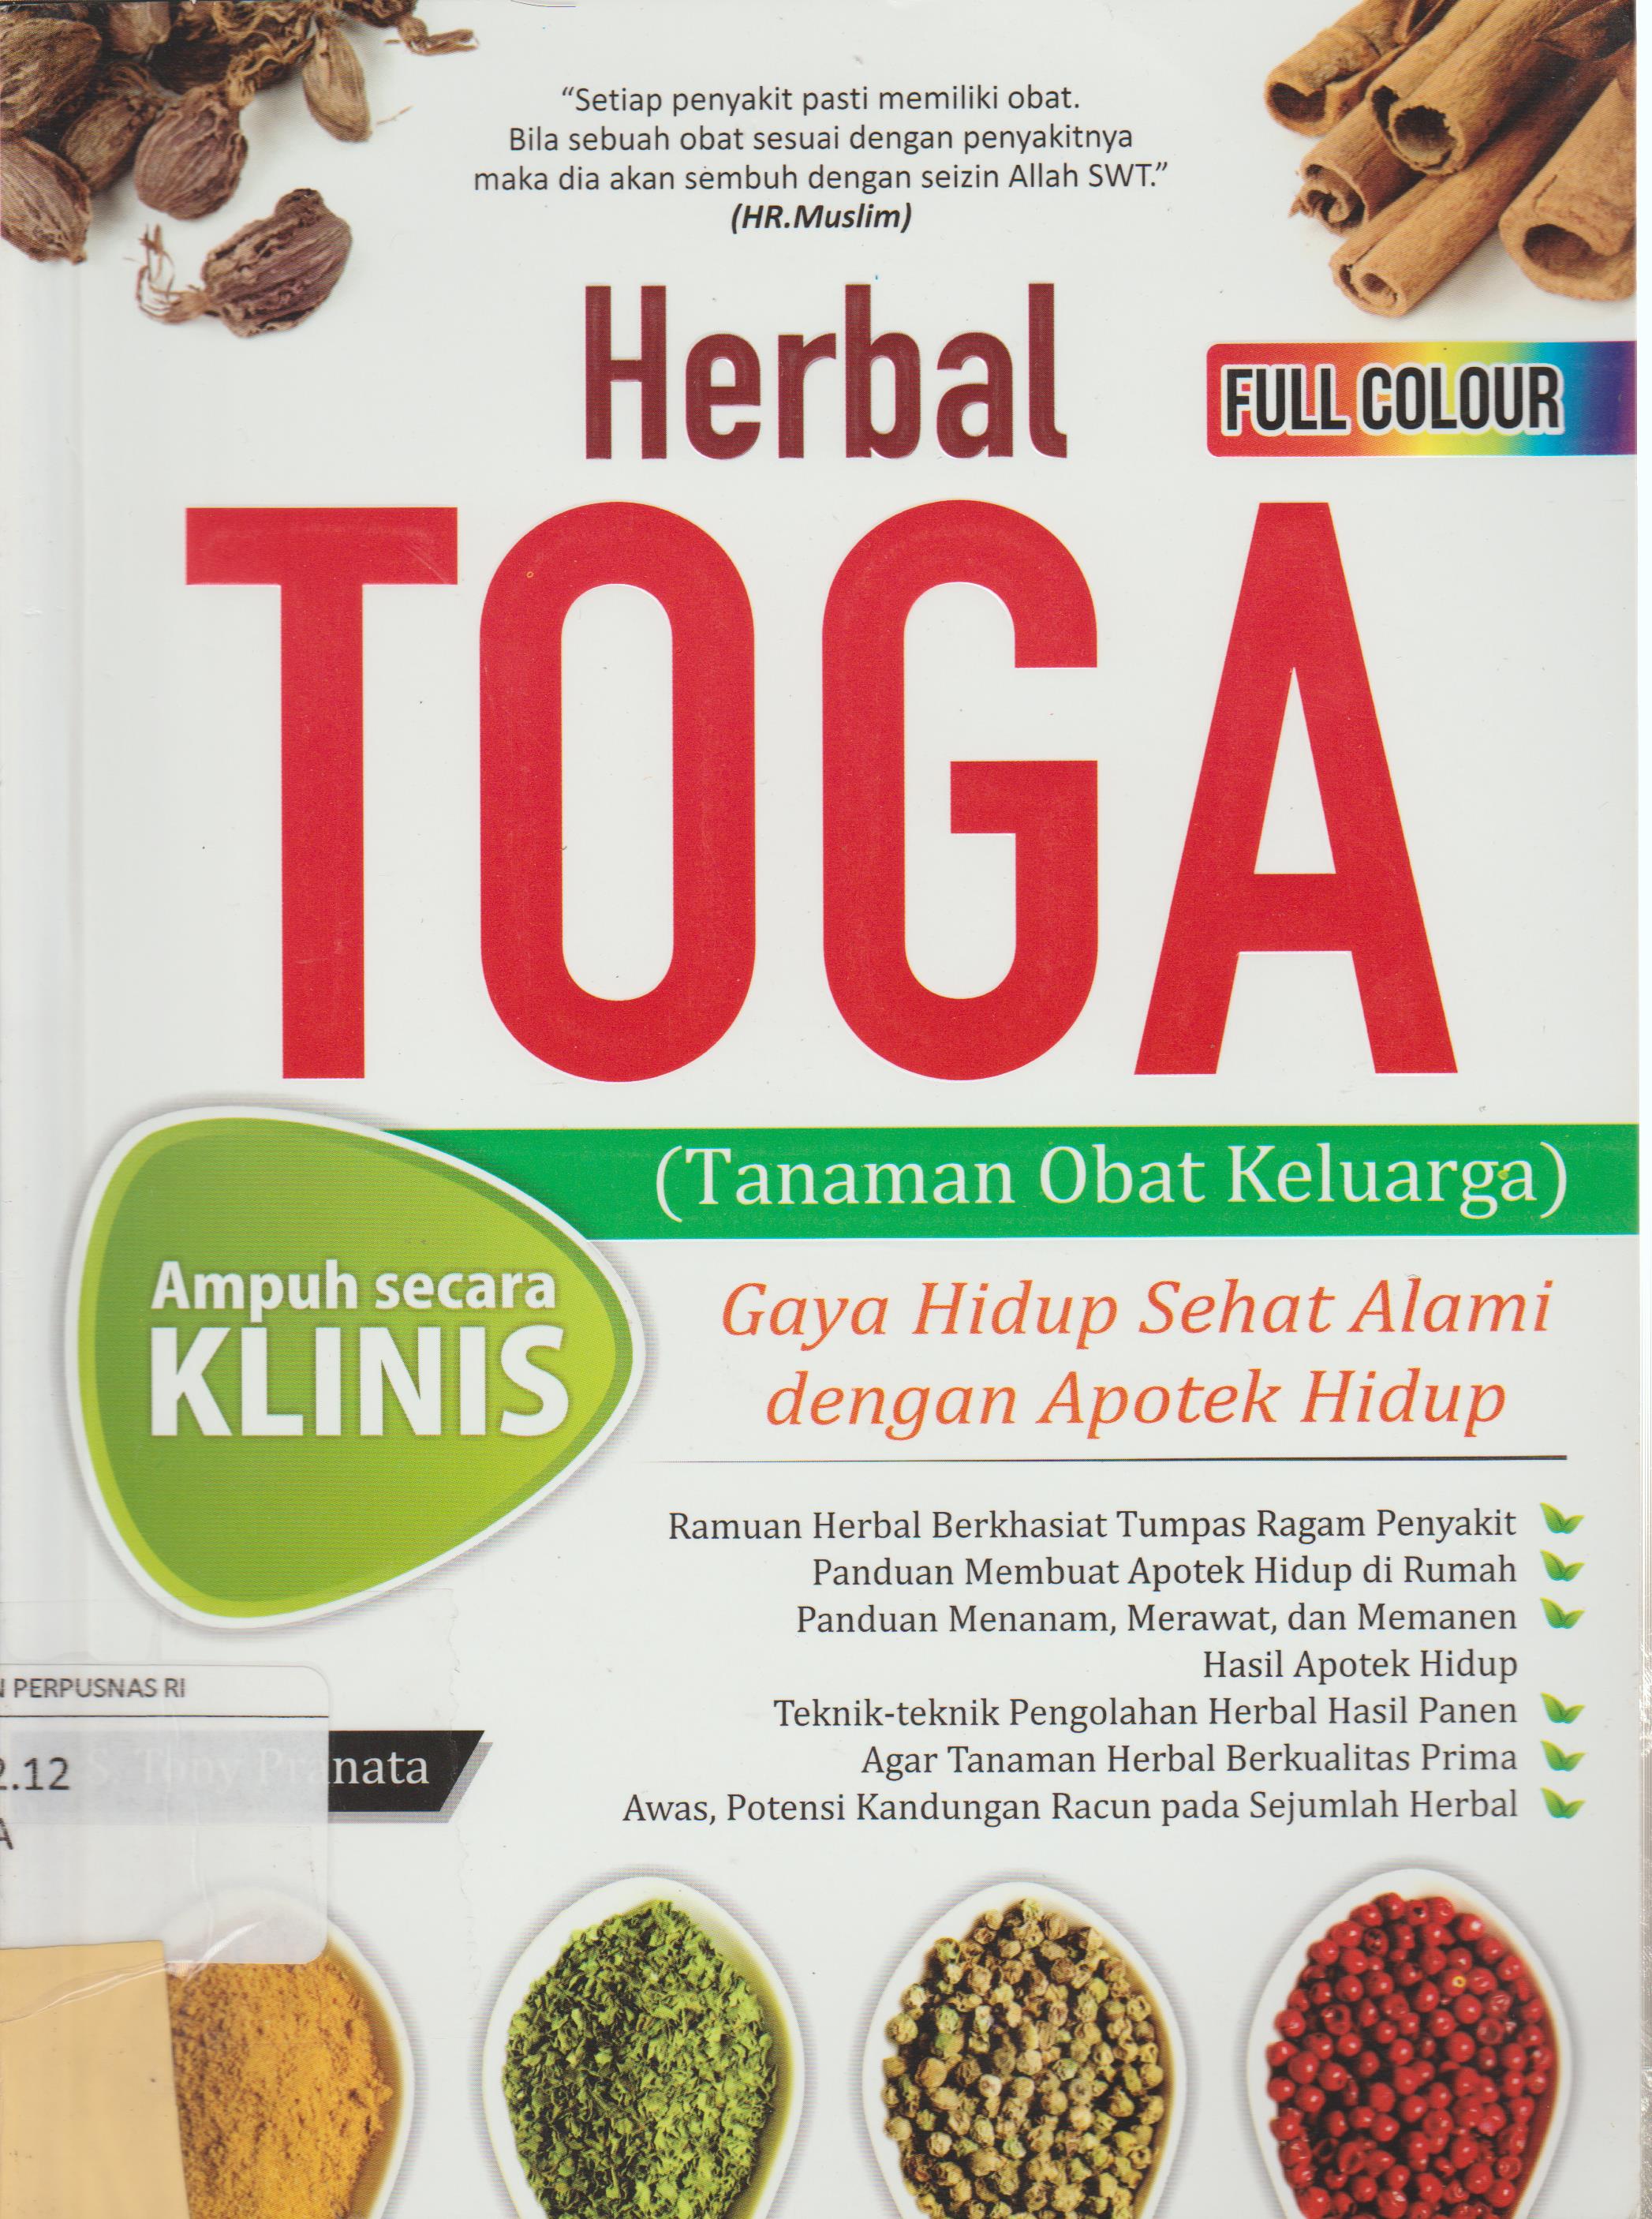 Herbal TOGA (Tanaman Obat Keluarga)